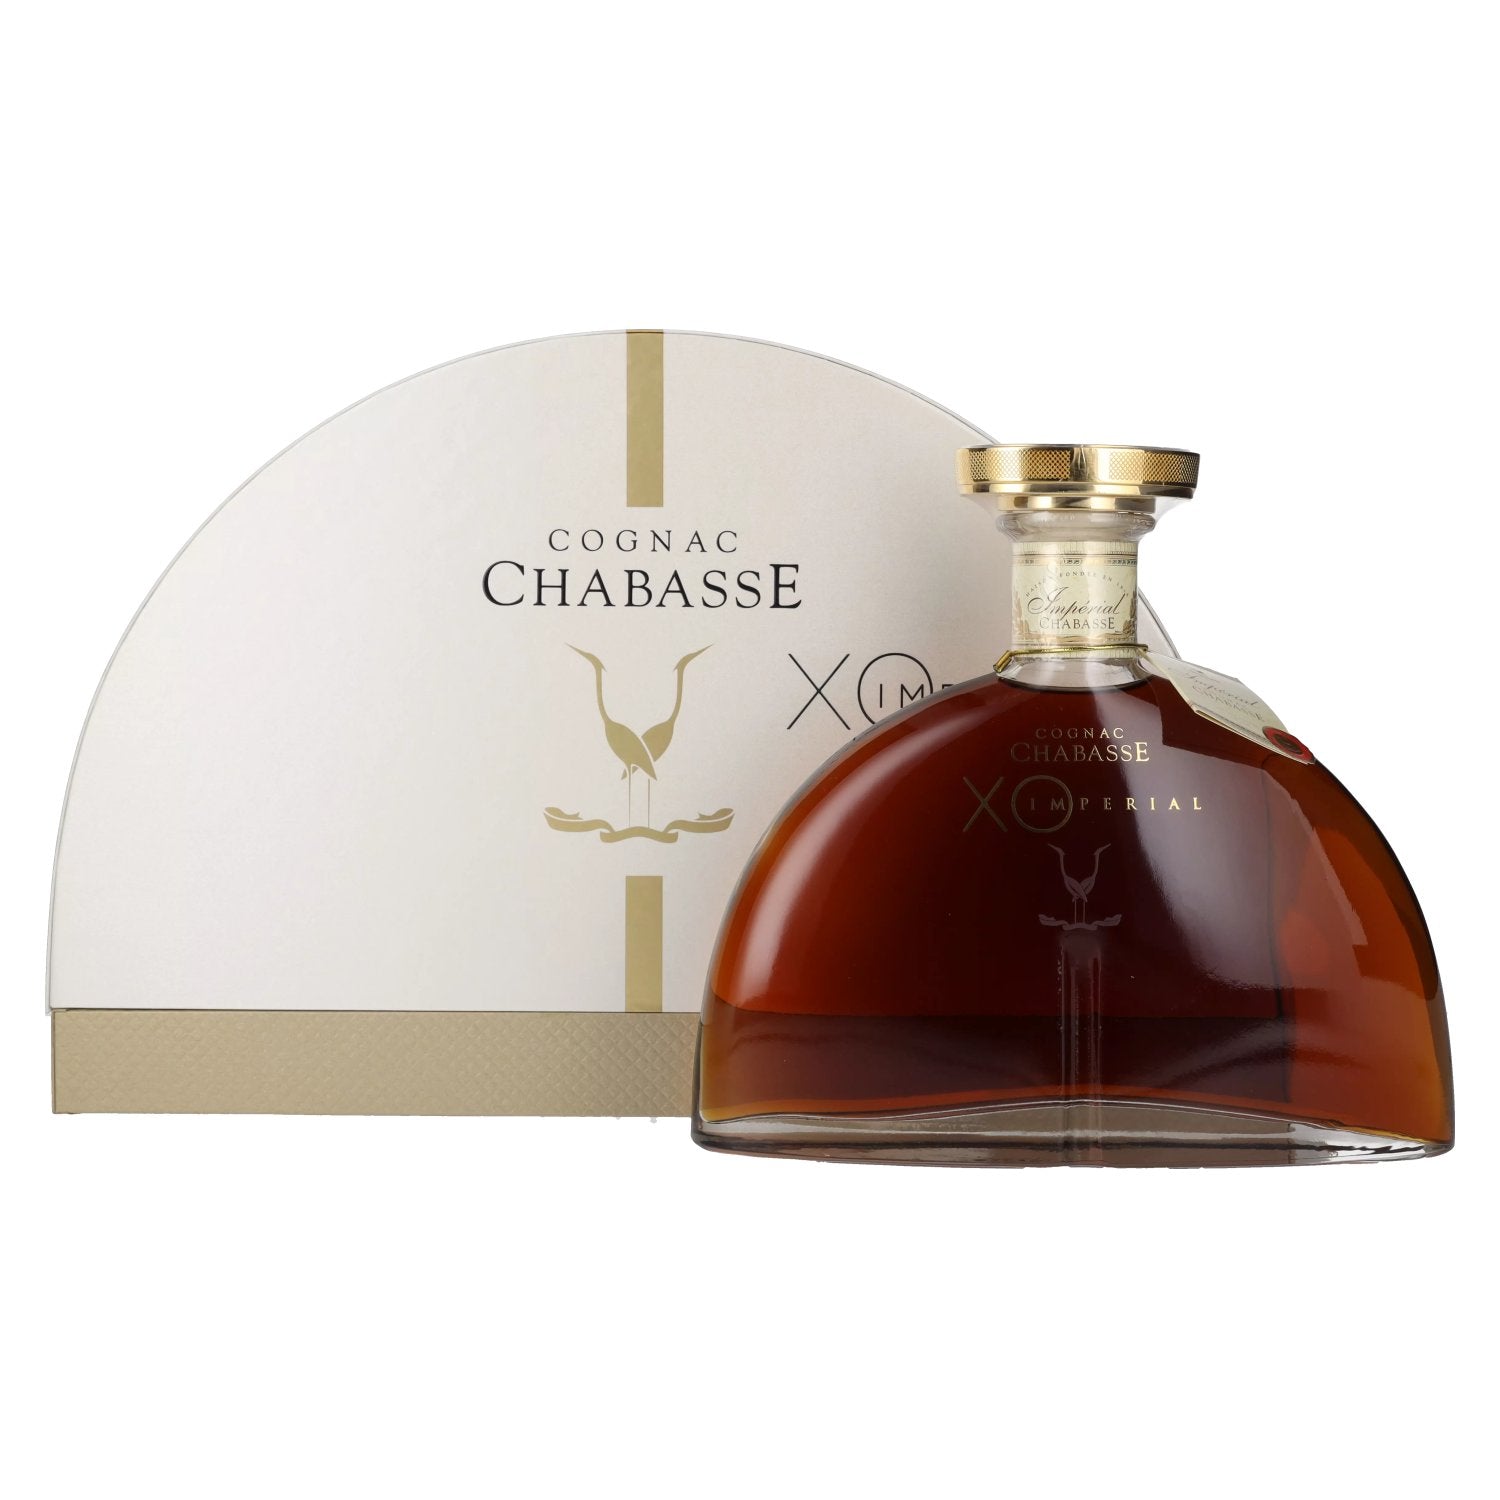 Chabasse XO IMPERIAL Cognac 40% Vol. 0,7l in Giftbox